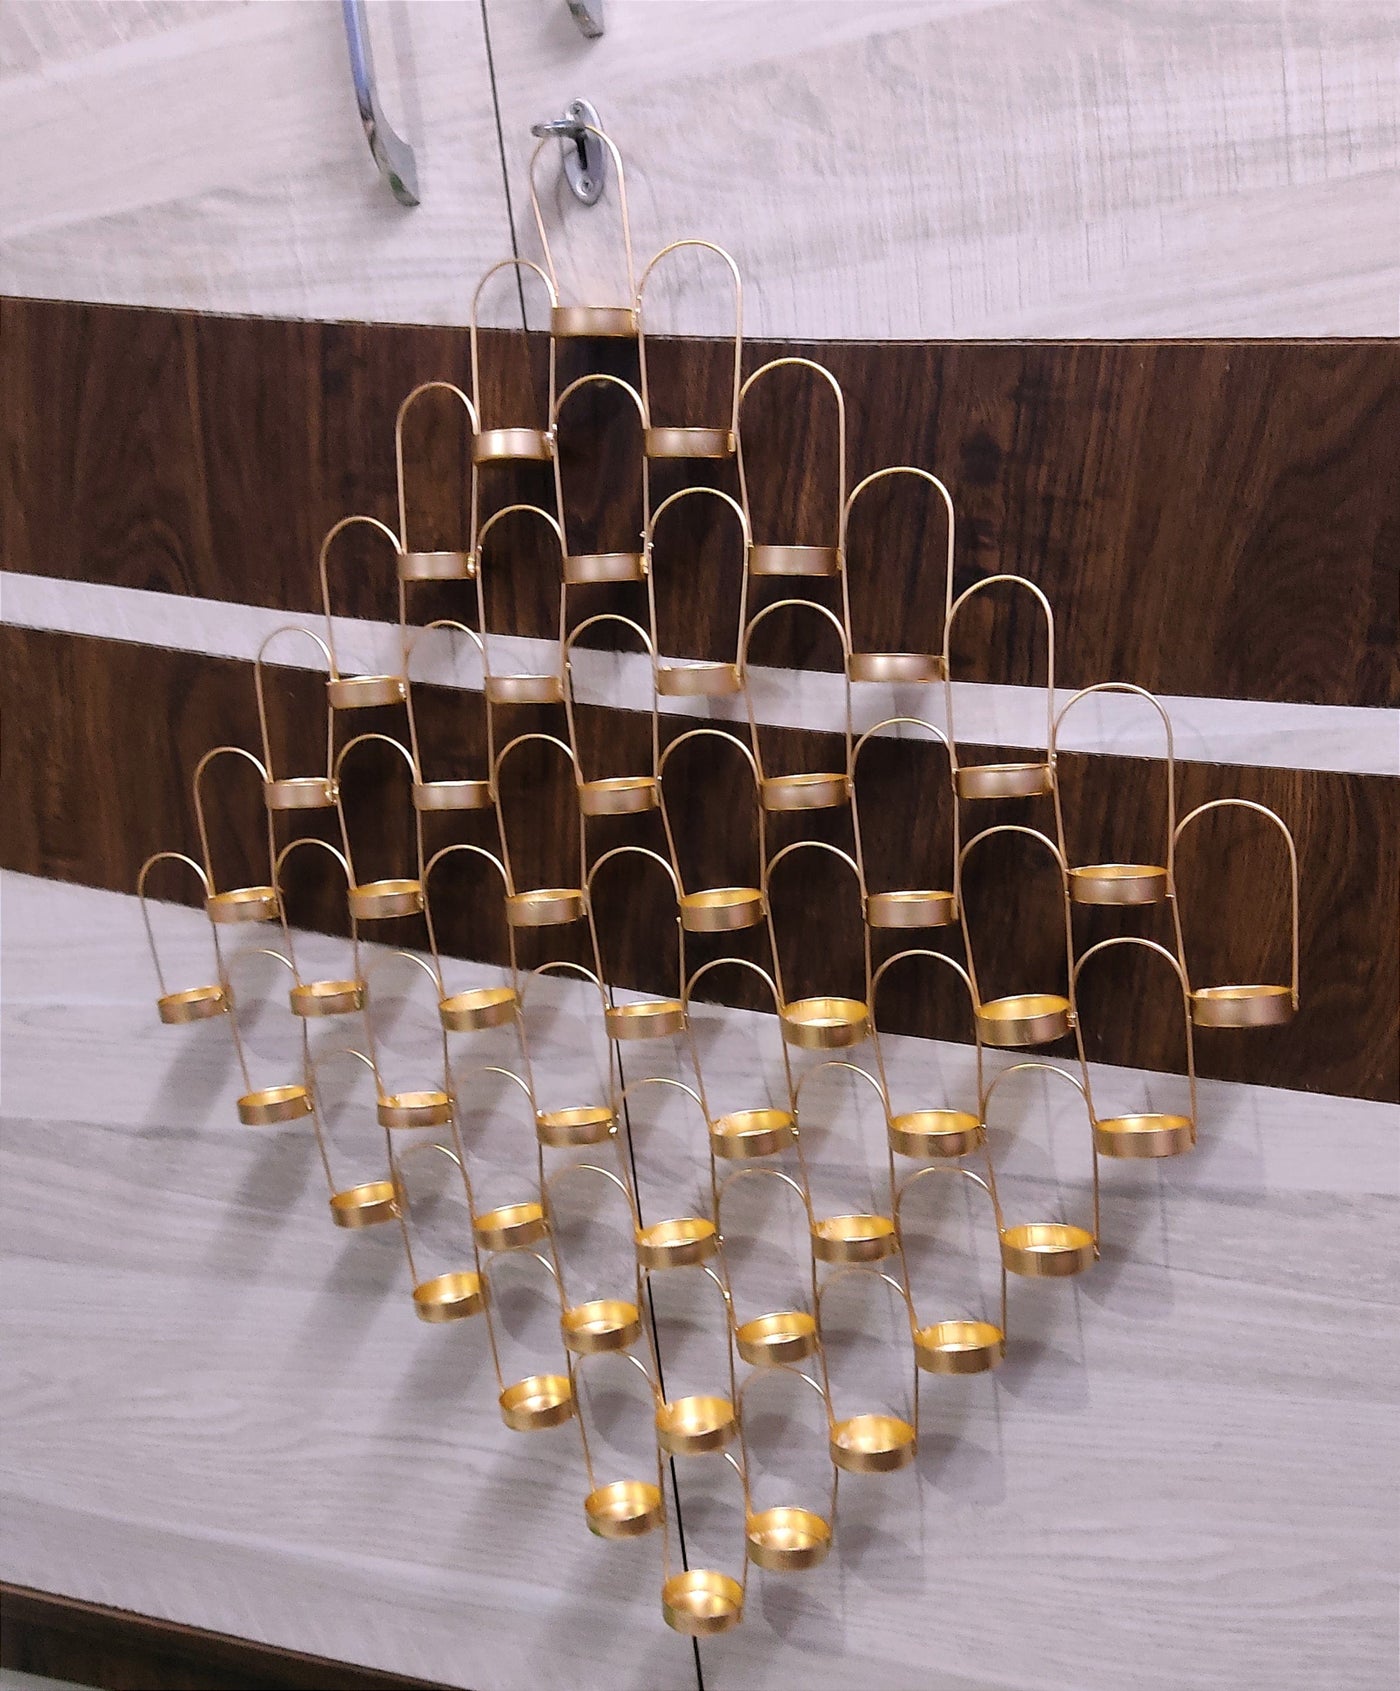 LAMANSH diya stand LAMANSH® 22*20 inch Diya Stand for Event Dancing 💃 Props Usage & Festival , Diwali Decoration / Golden Metal Diya Candle Holder for Bride & Groom entry